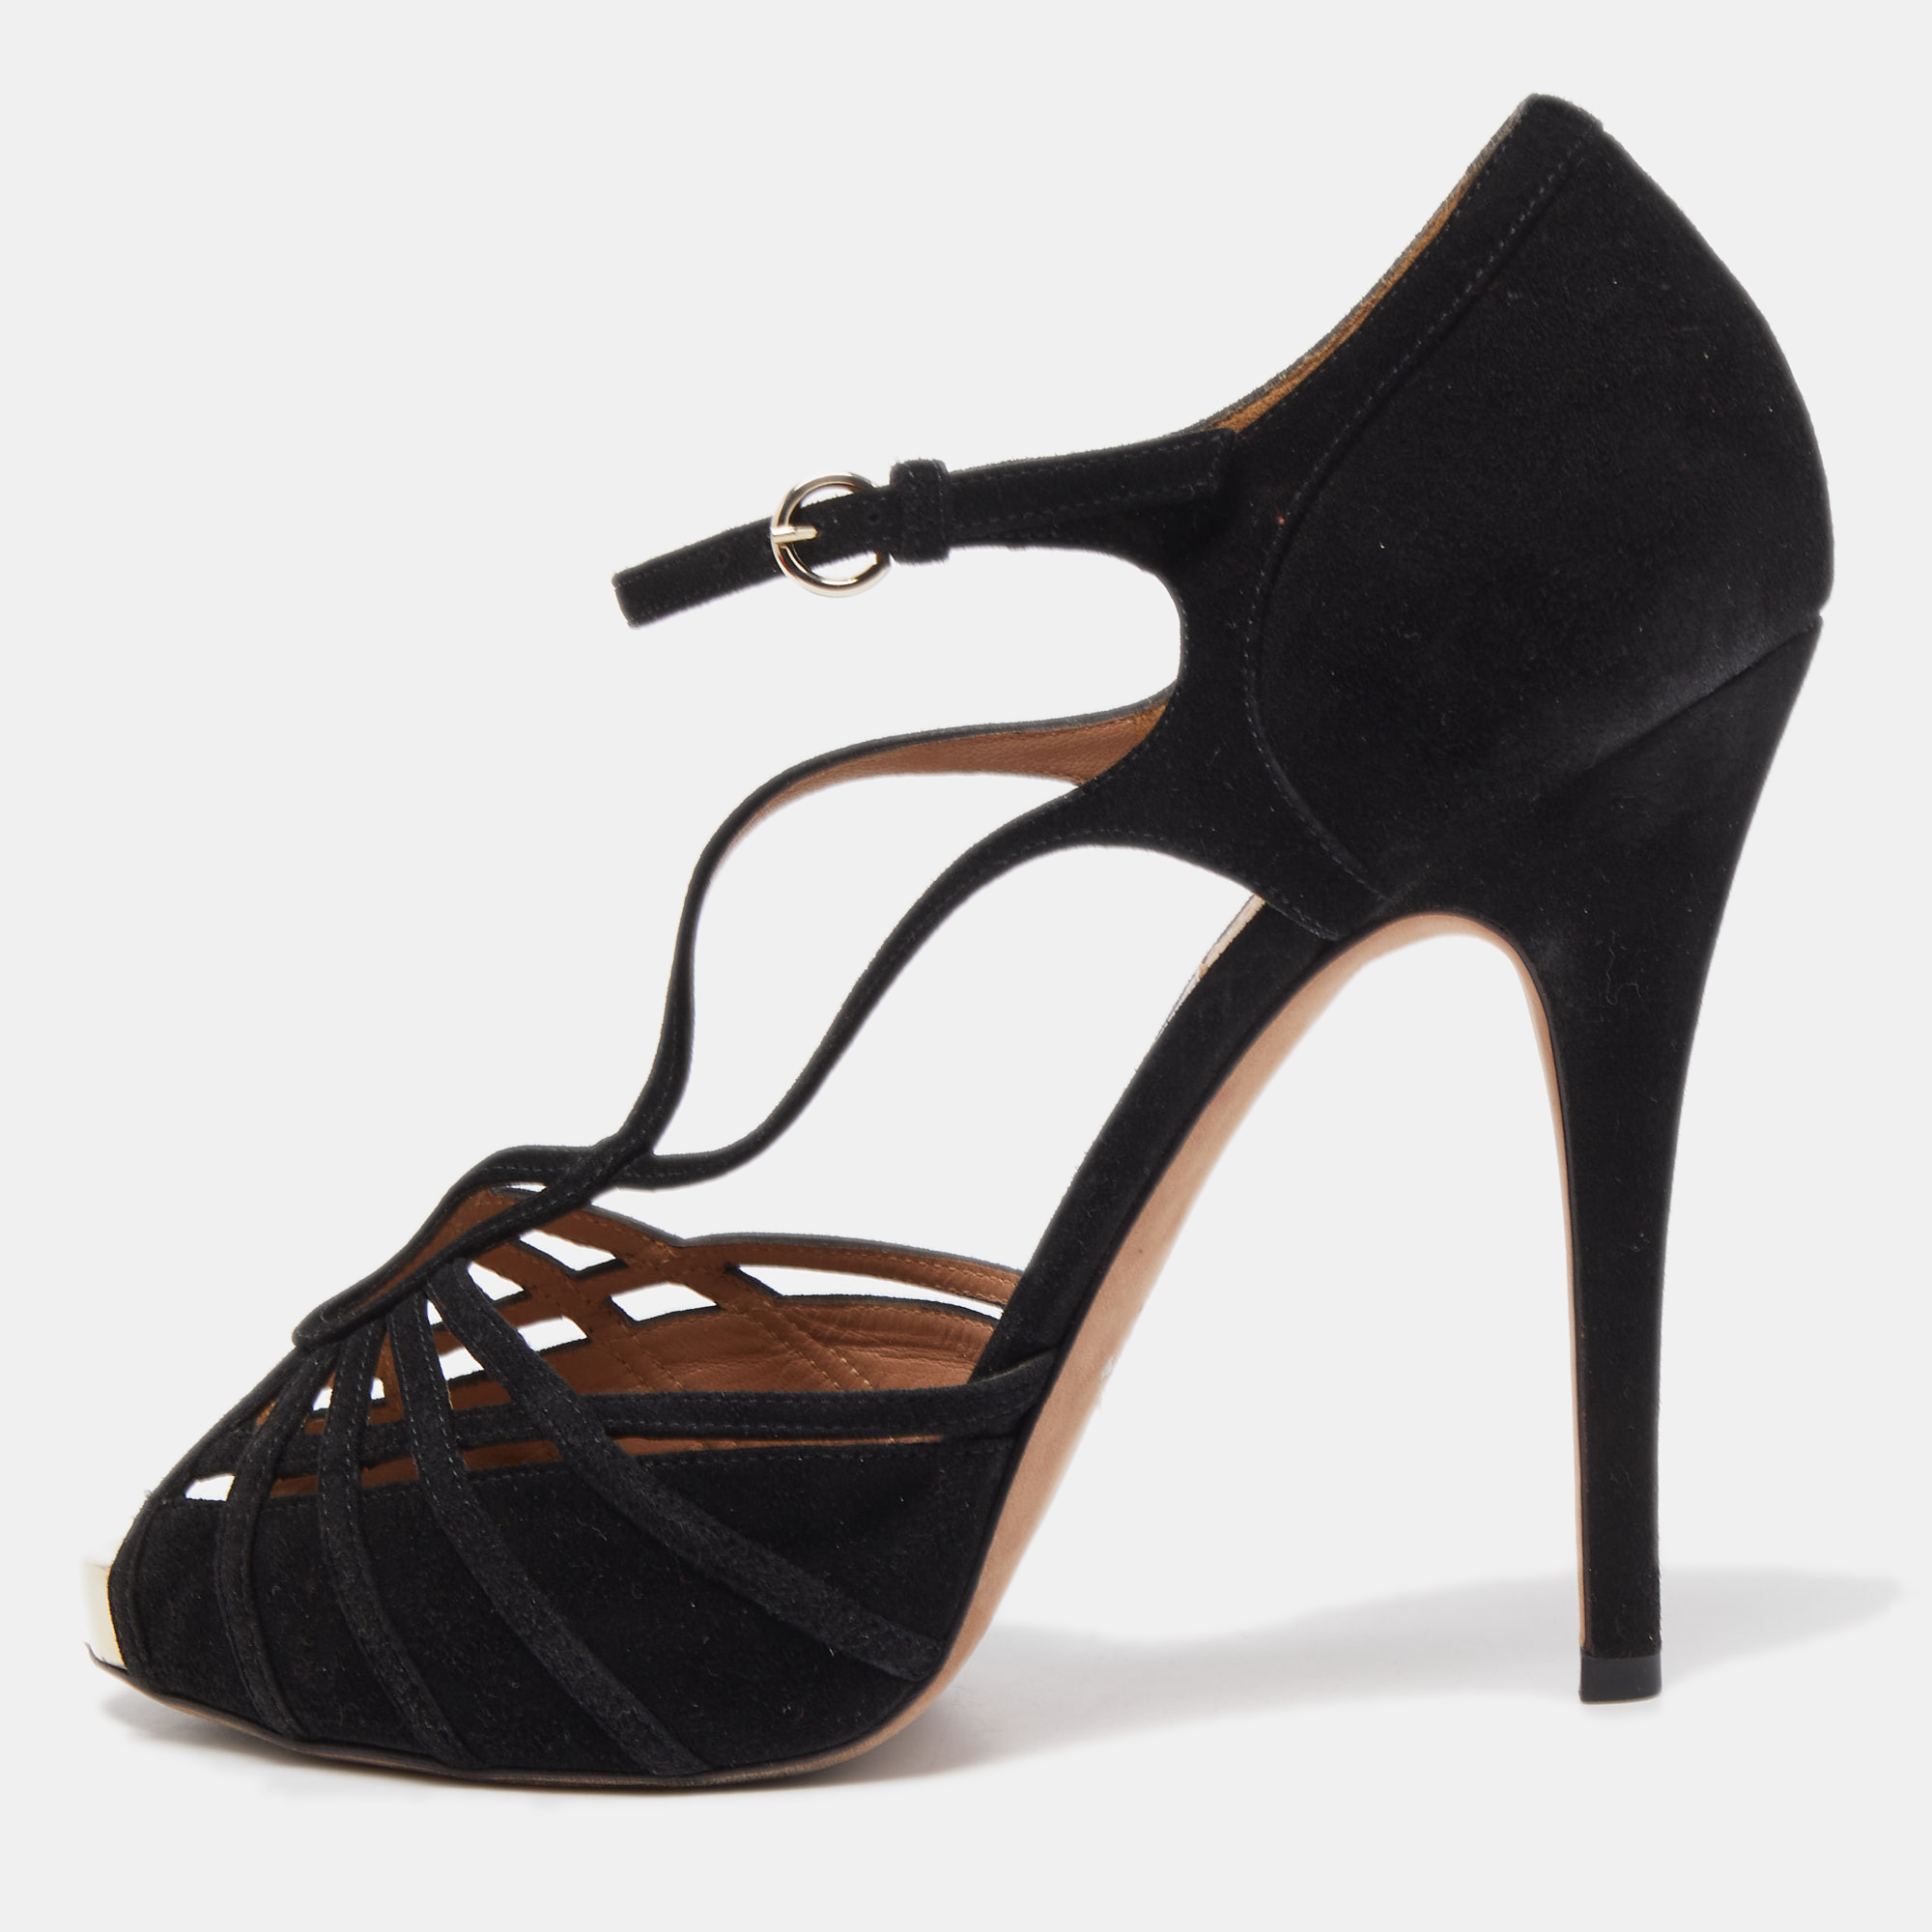 Valentino black suede strappy sandals size 39